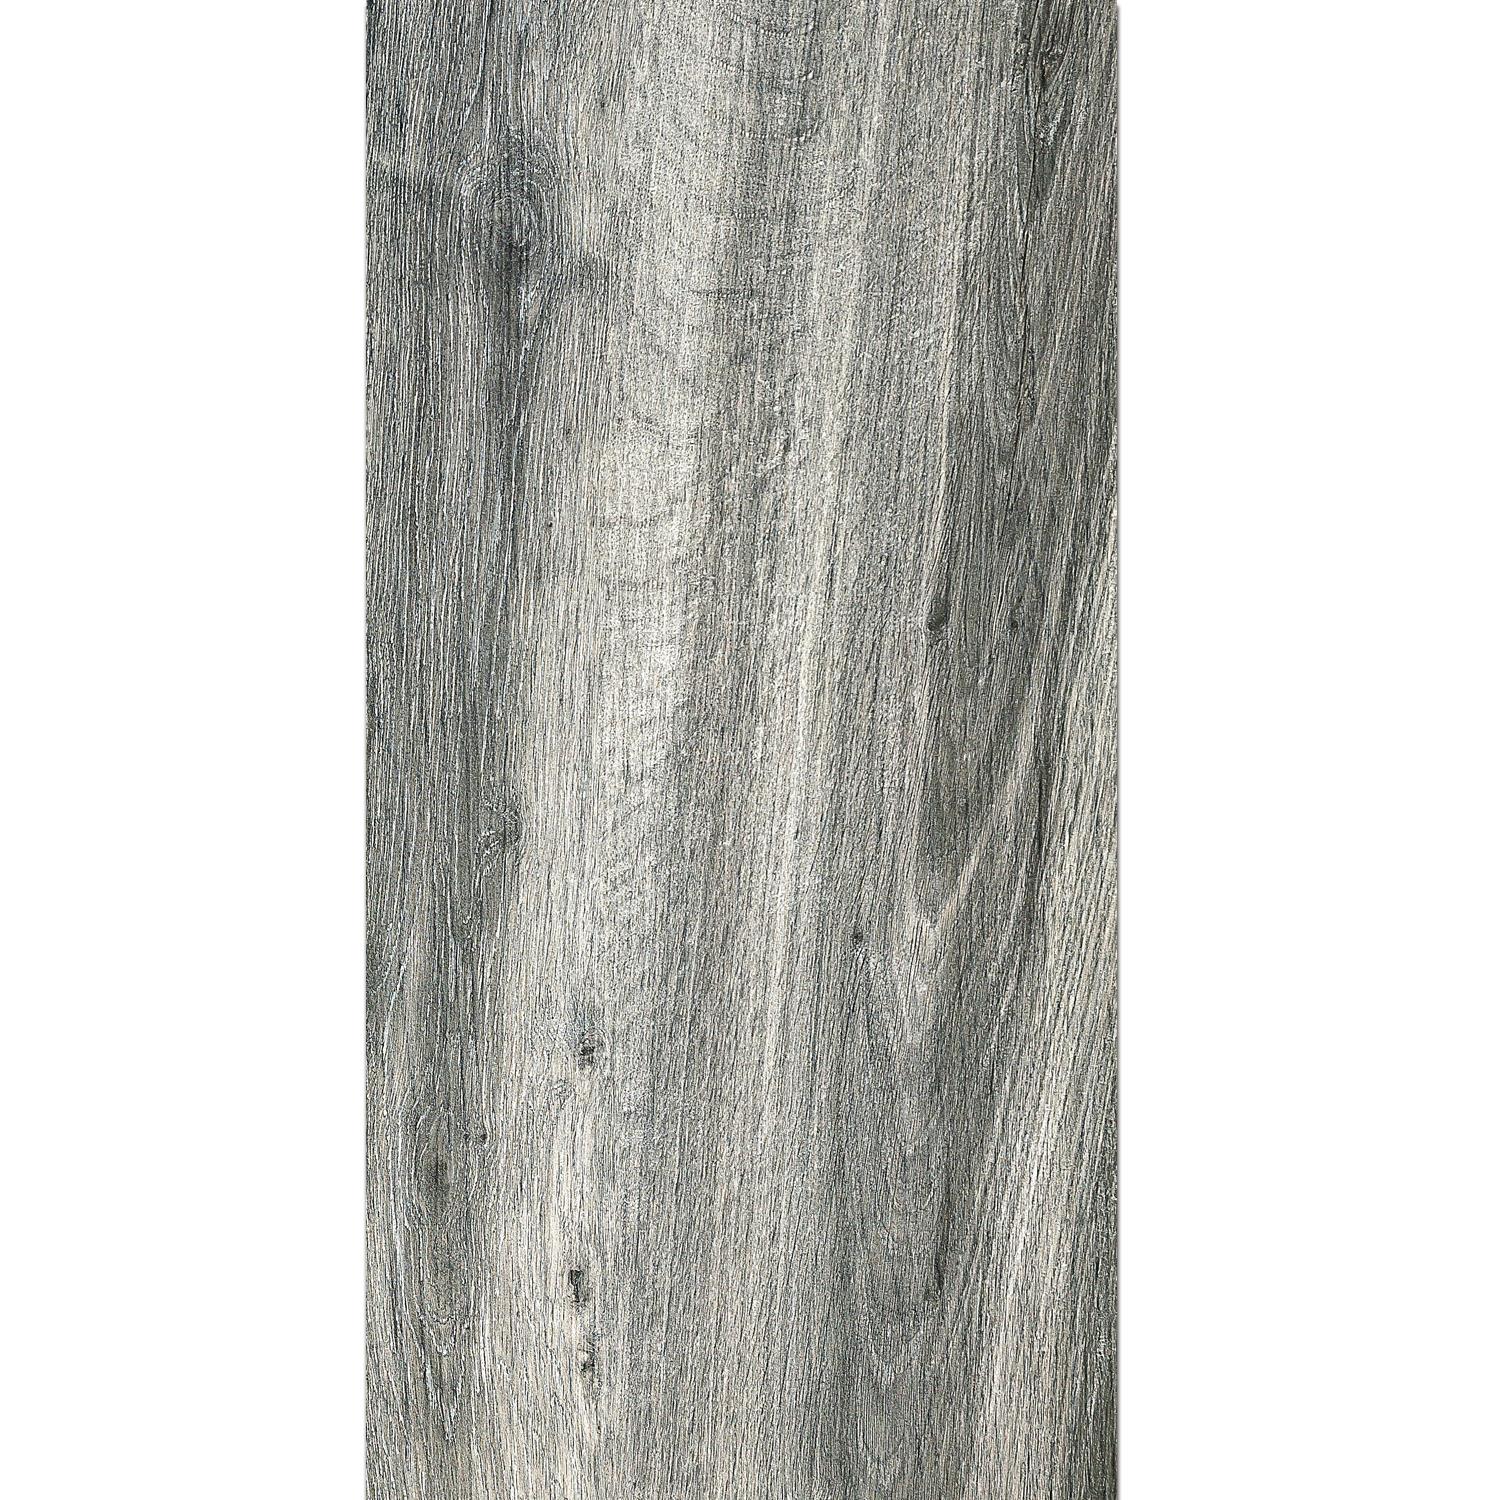 Terrastegels Starwood Houtlook Grey 45x90cm